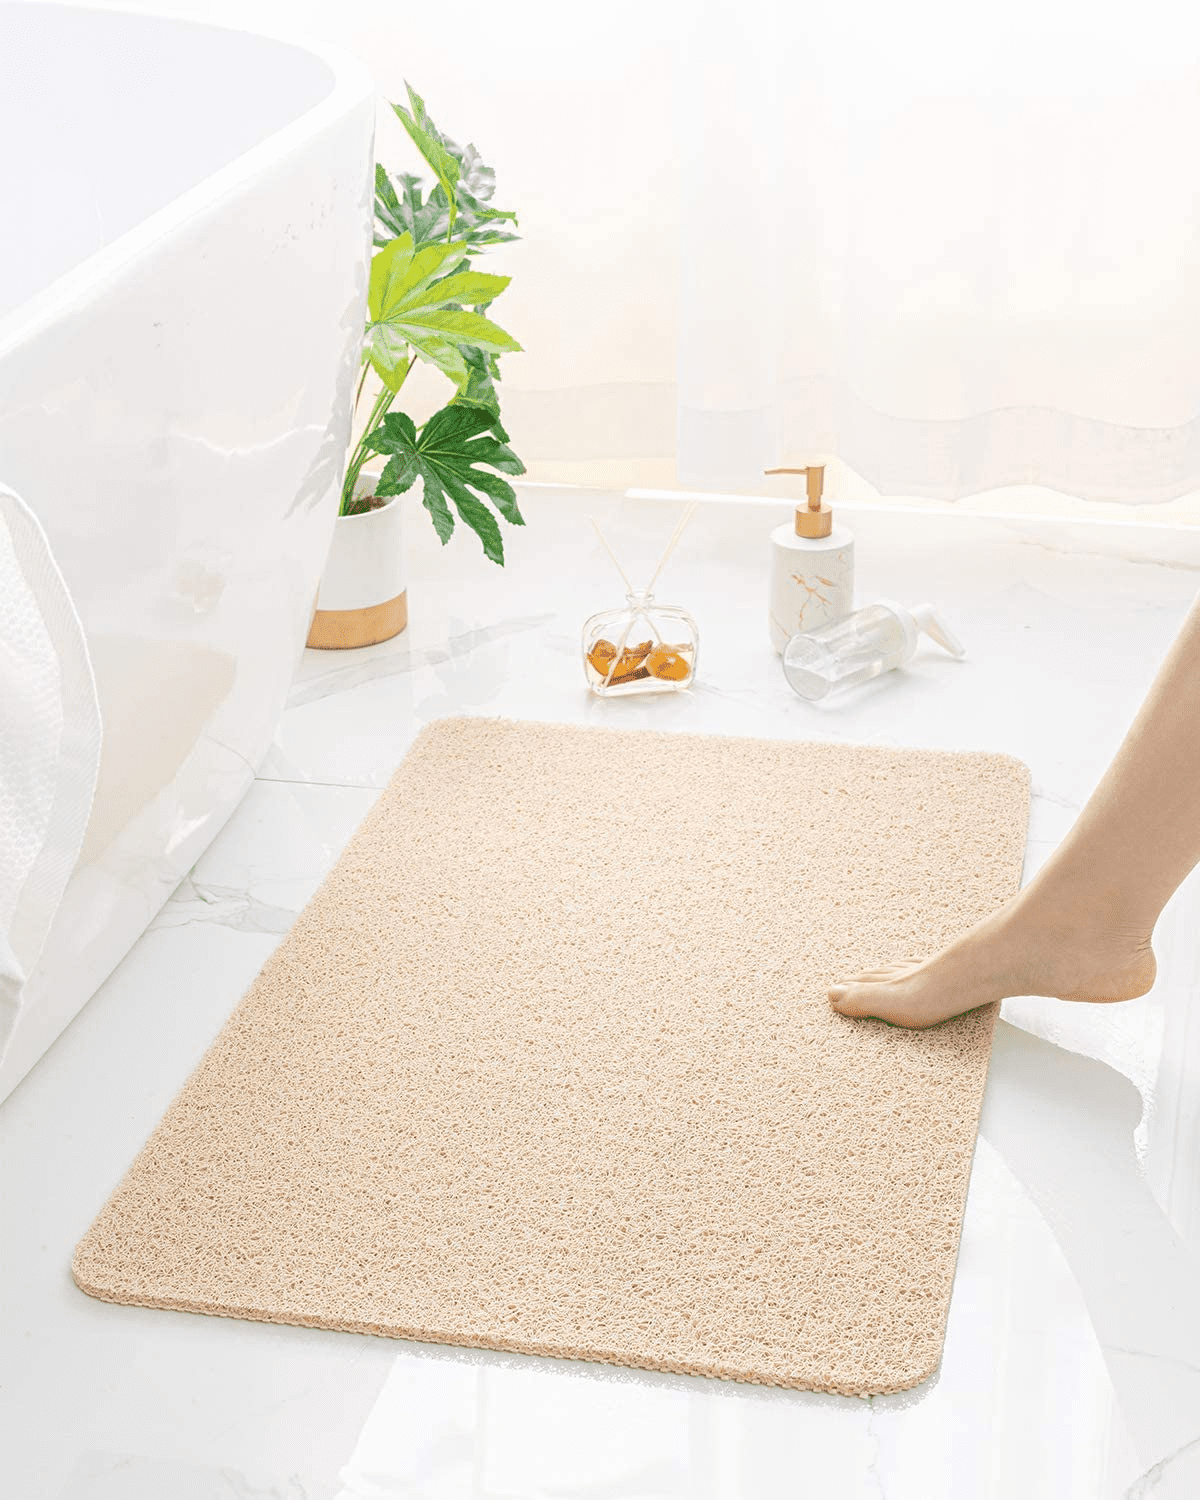 MontVoo Non Slip Bathtub Mat, 17X 30 inch, Shower Mats for Bath Tub, PVC Loofah Bathroom Mats for Wet Areas, Quick Drying